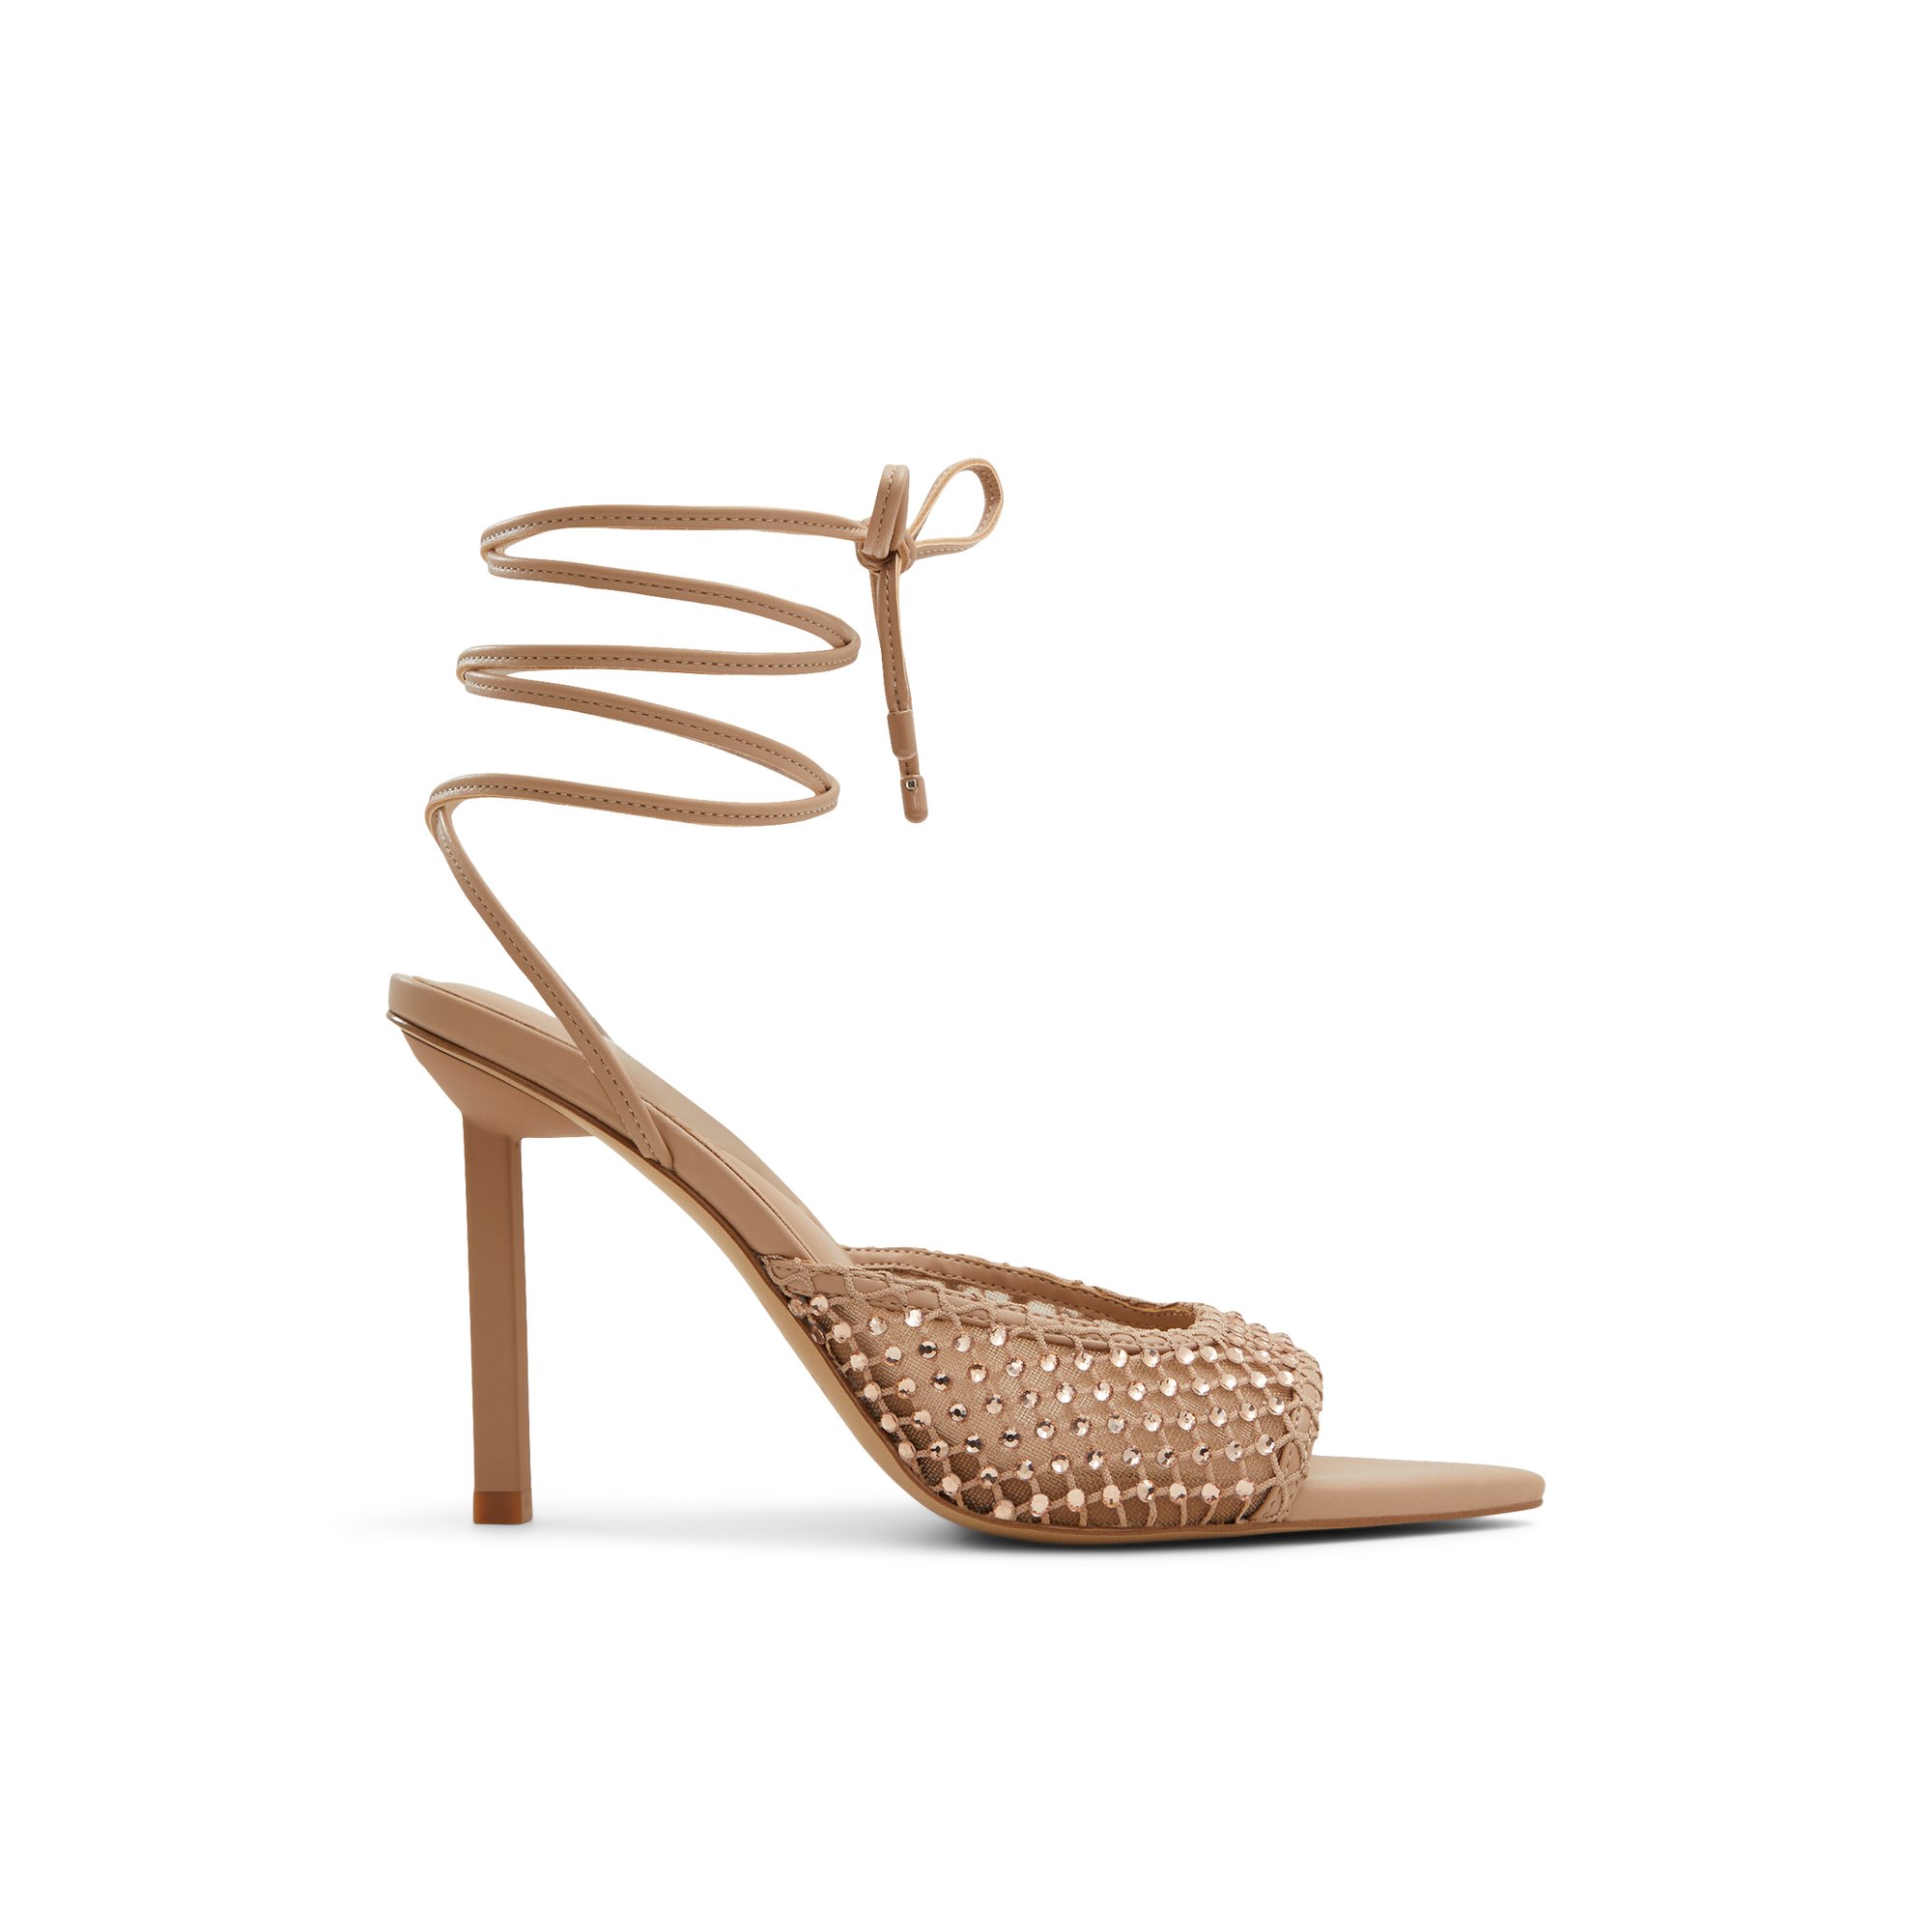 ALDO Jessamine - Women's Strappy Sandal Sandals - Beige